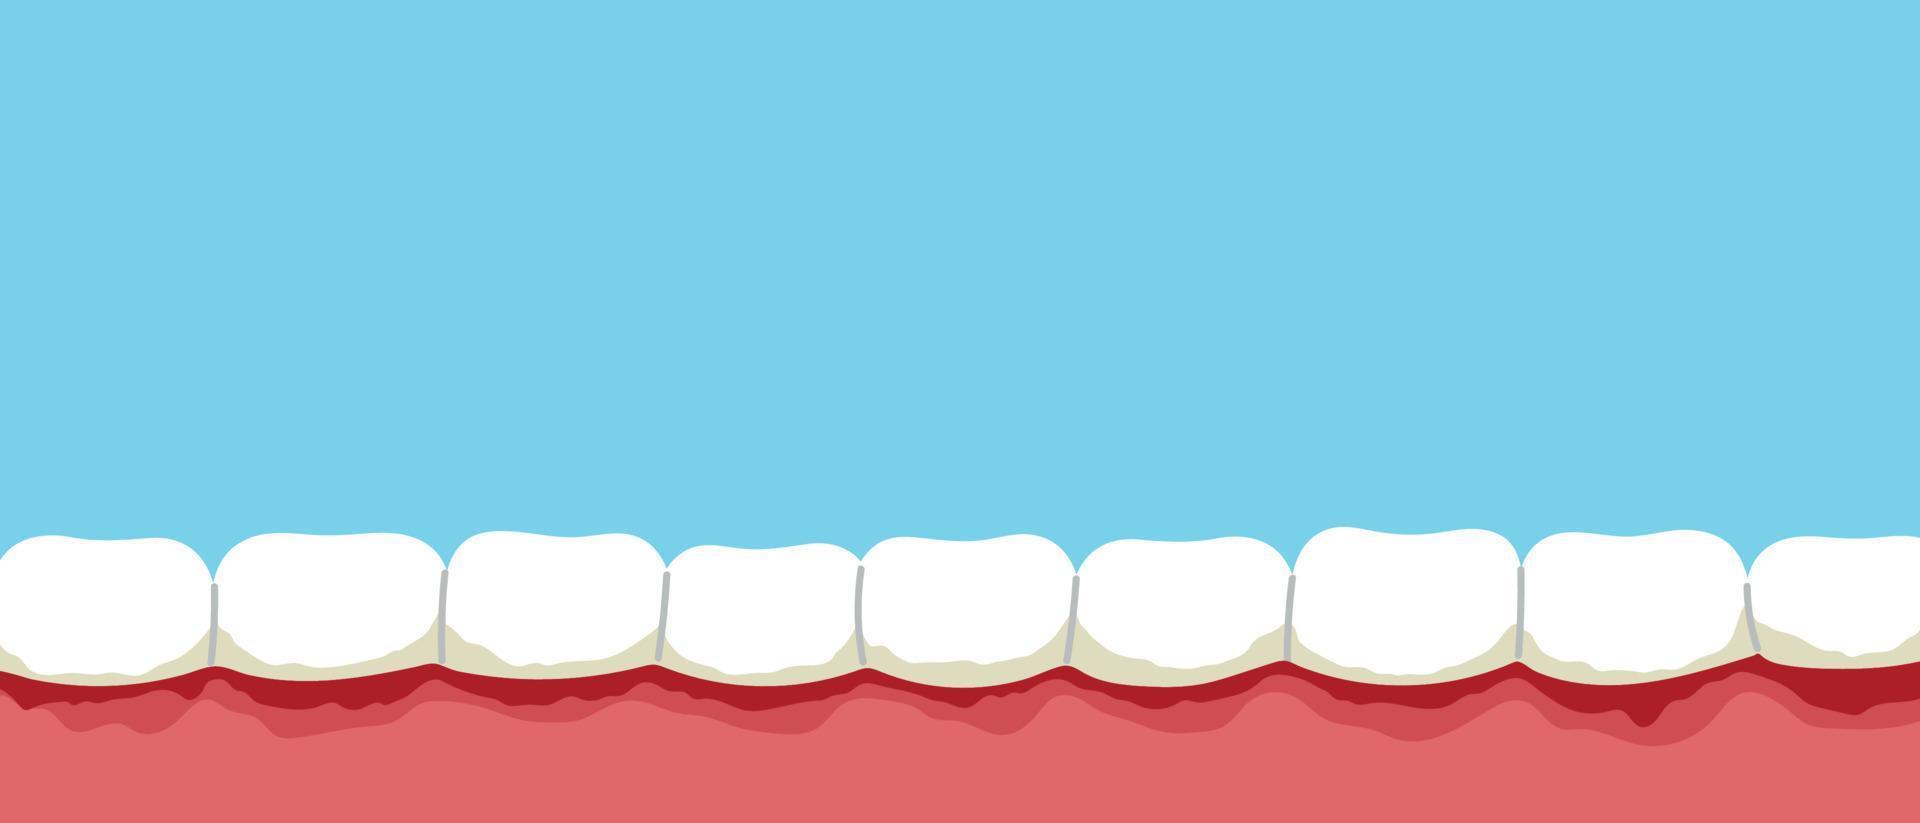 Gum disease cartoon banner. Periodontitis, gum bleeding, plaque on the teeth. Flat vector isolated illustration